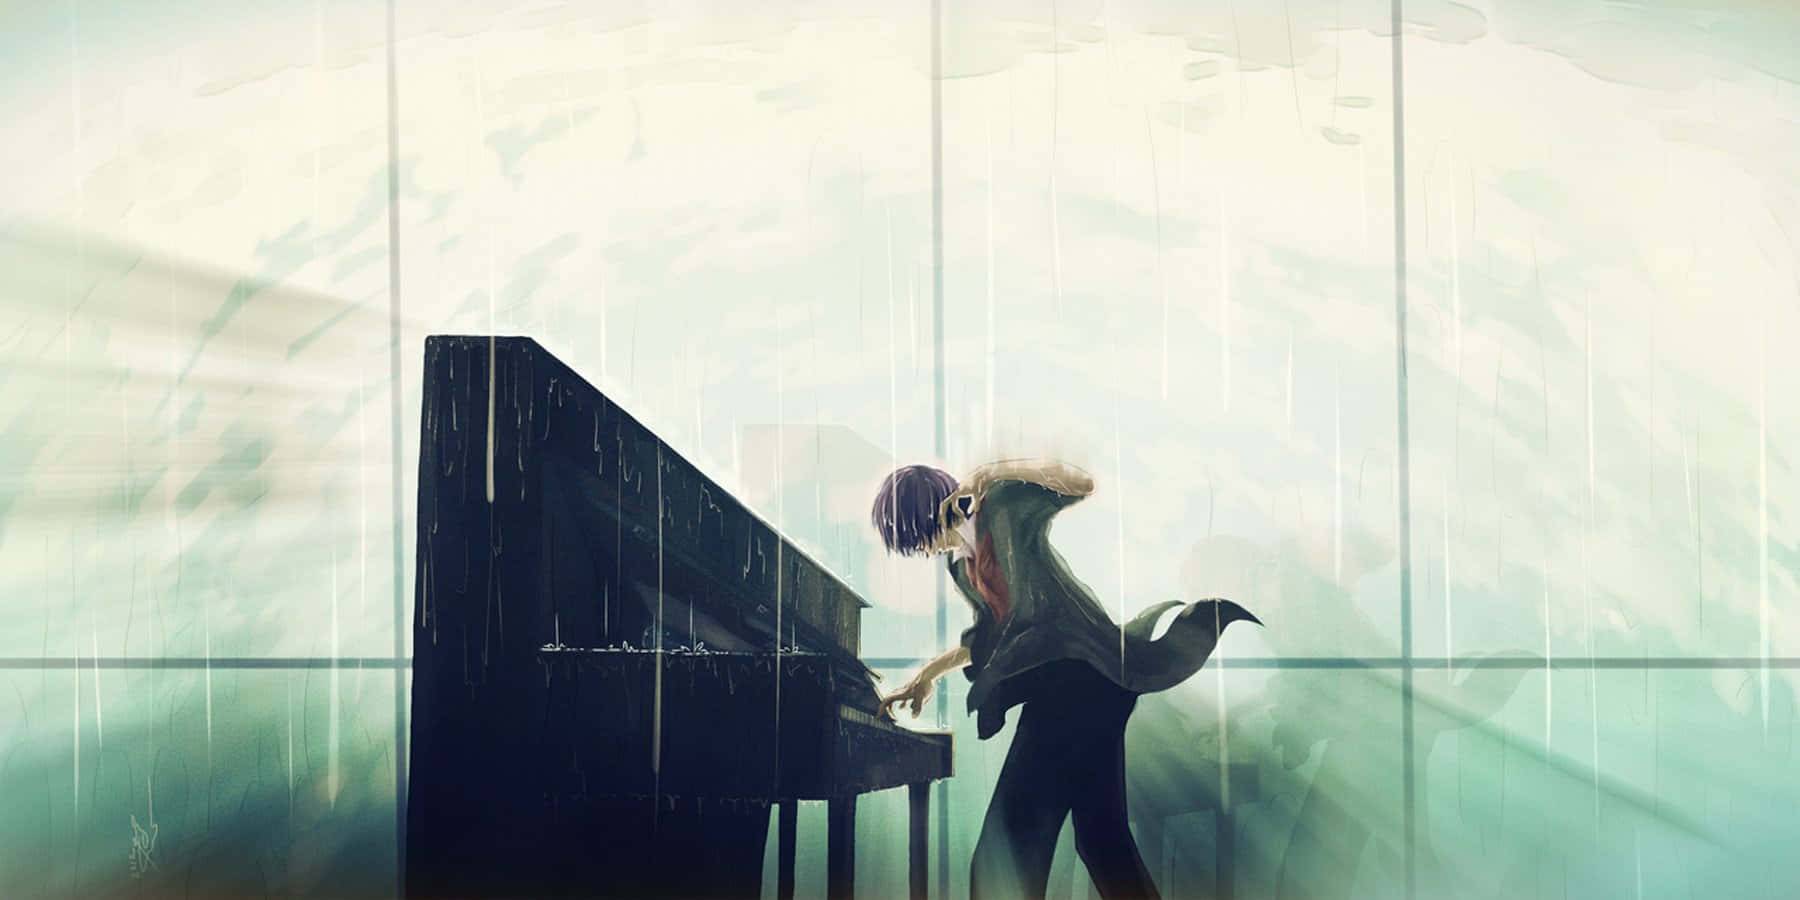 Anime Piano Wallpapers